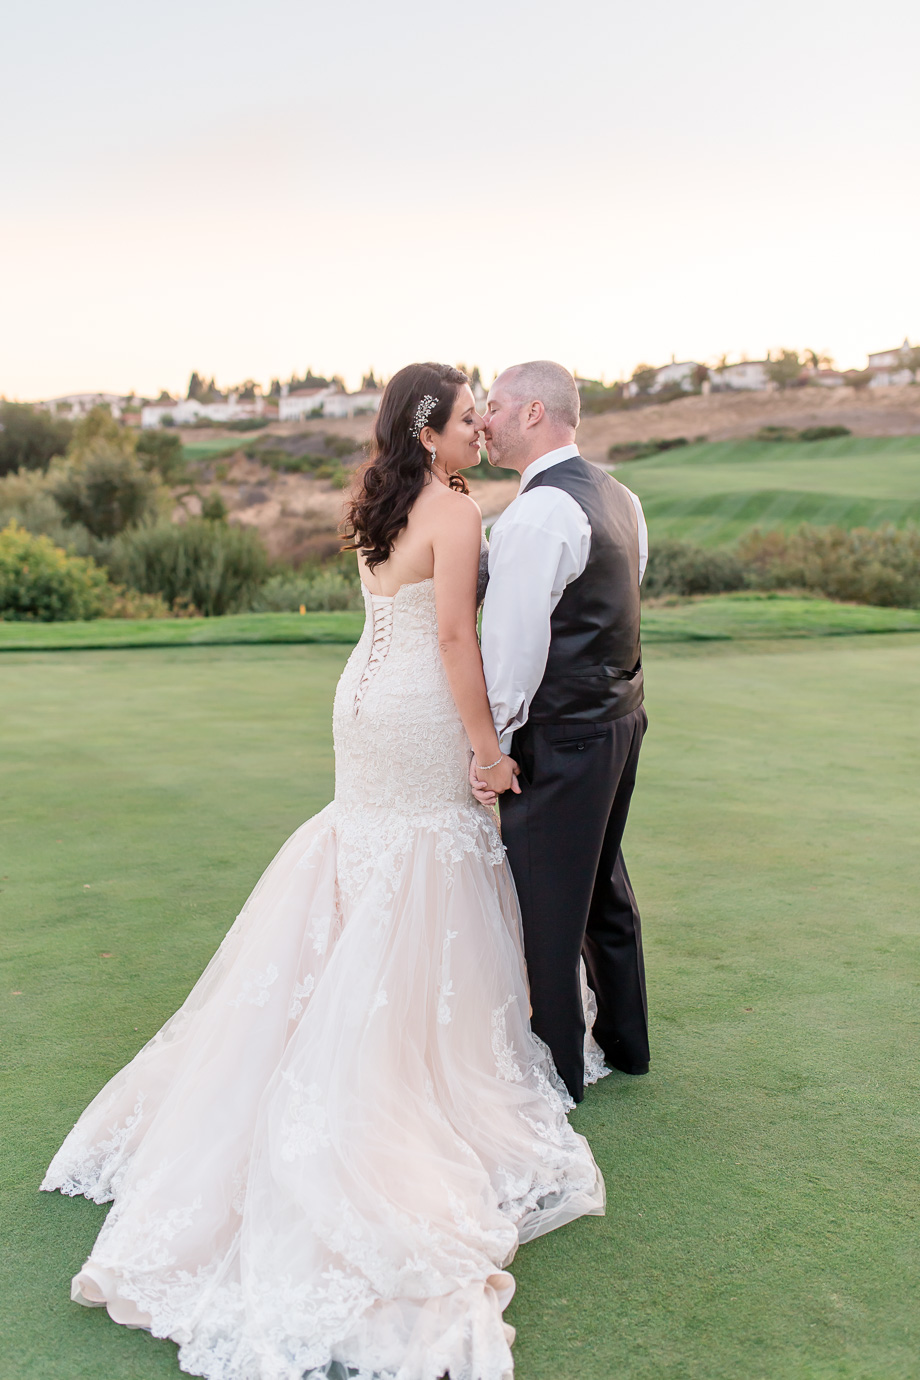 beautiful sunset wedding portrait at the Bridges Golf Club in San Ramon